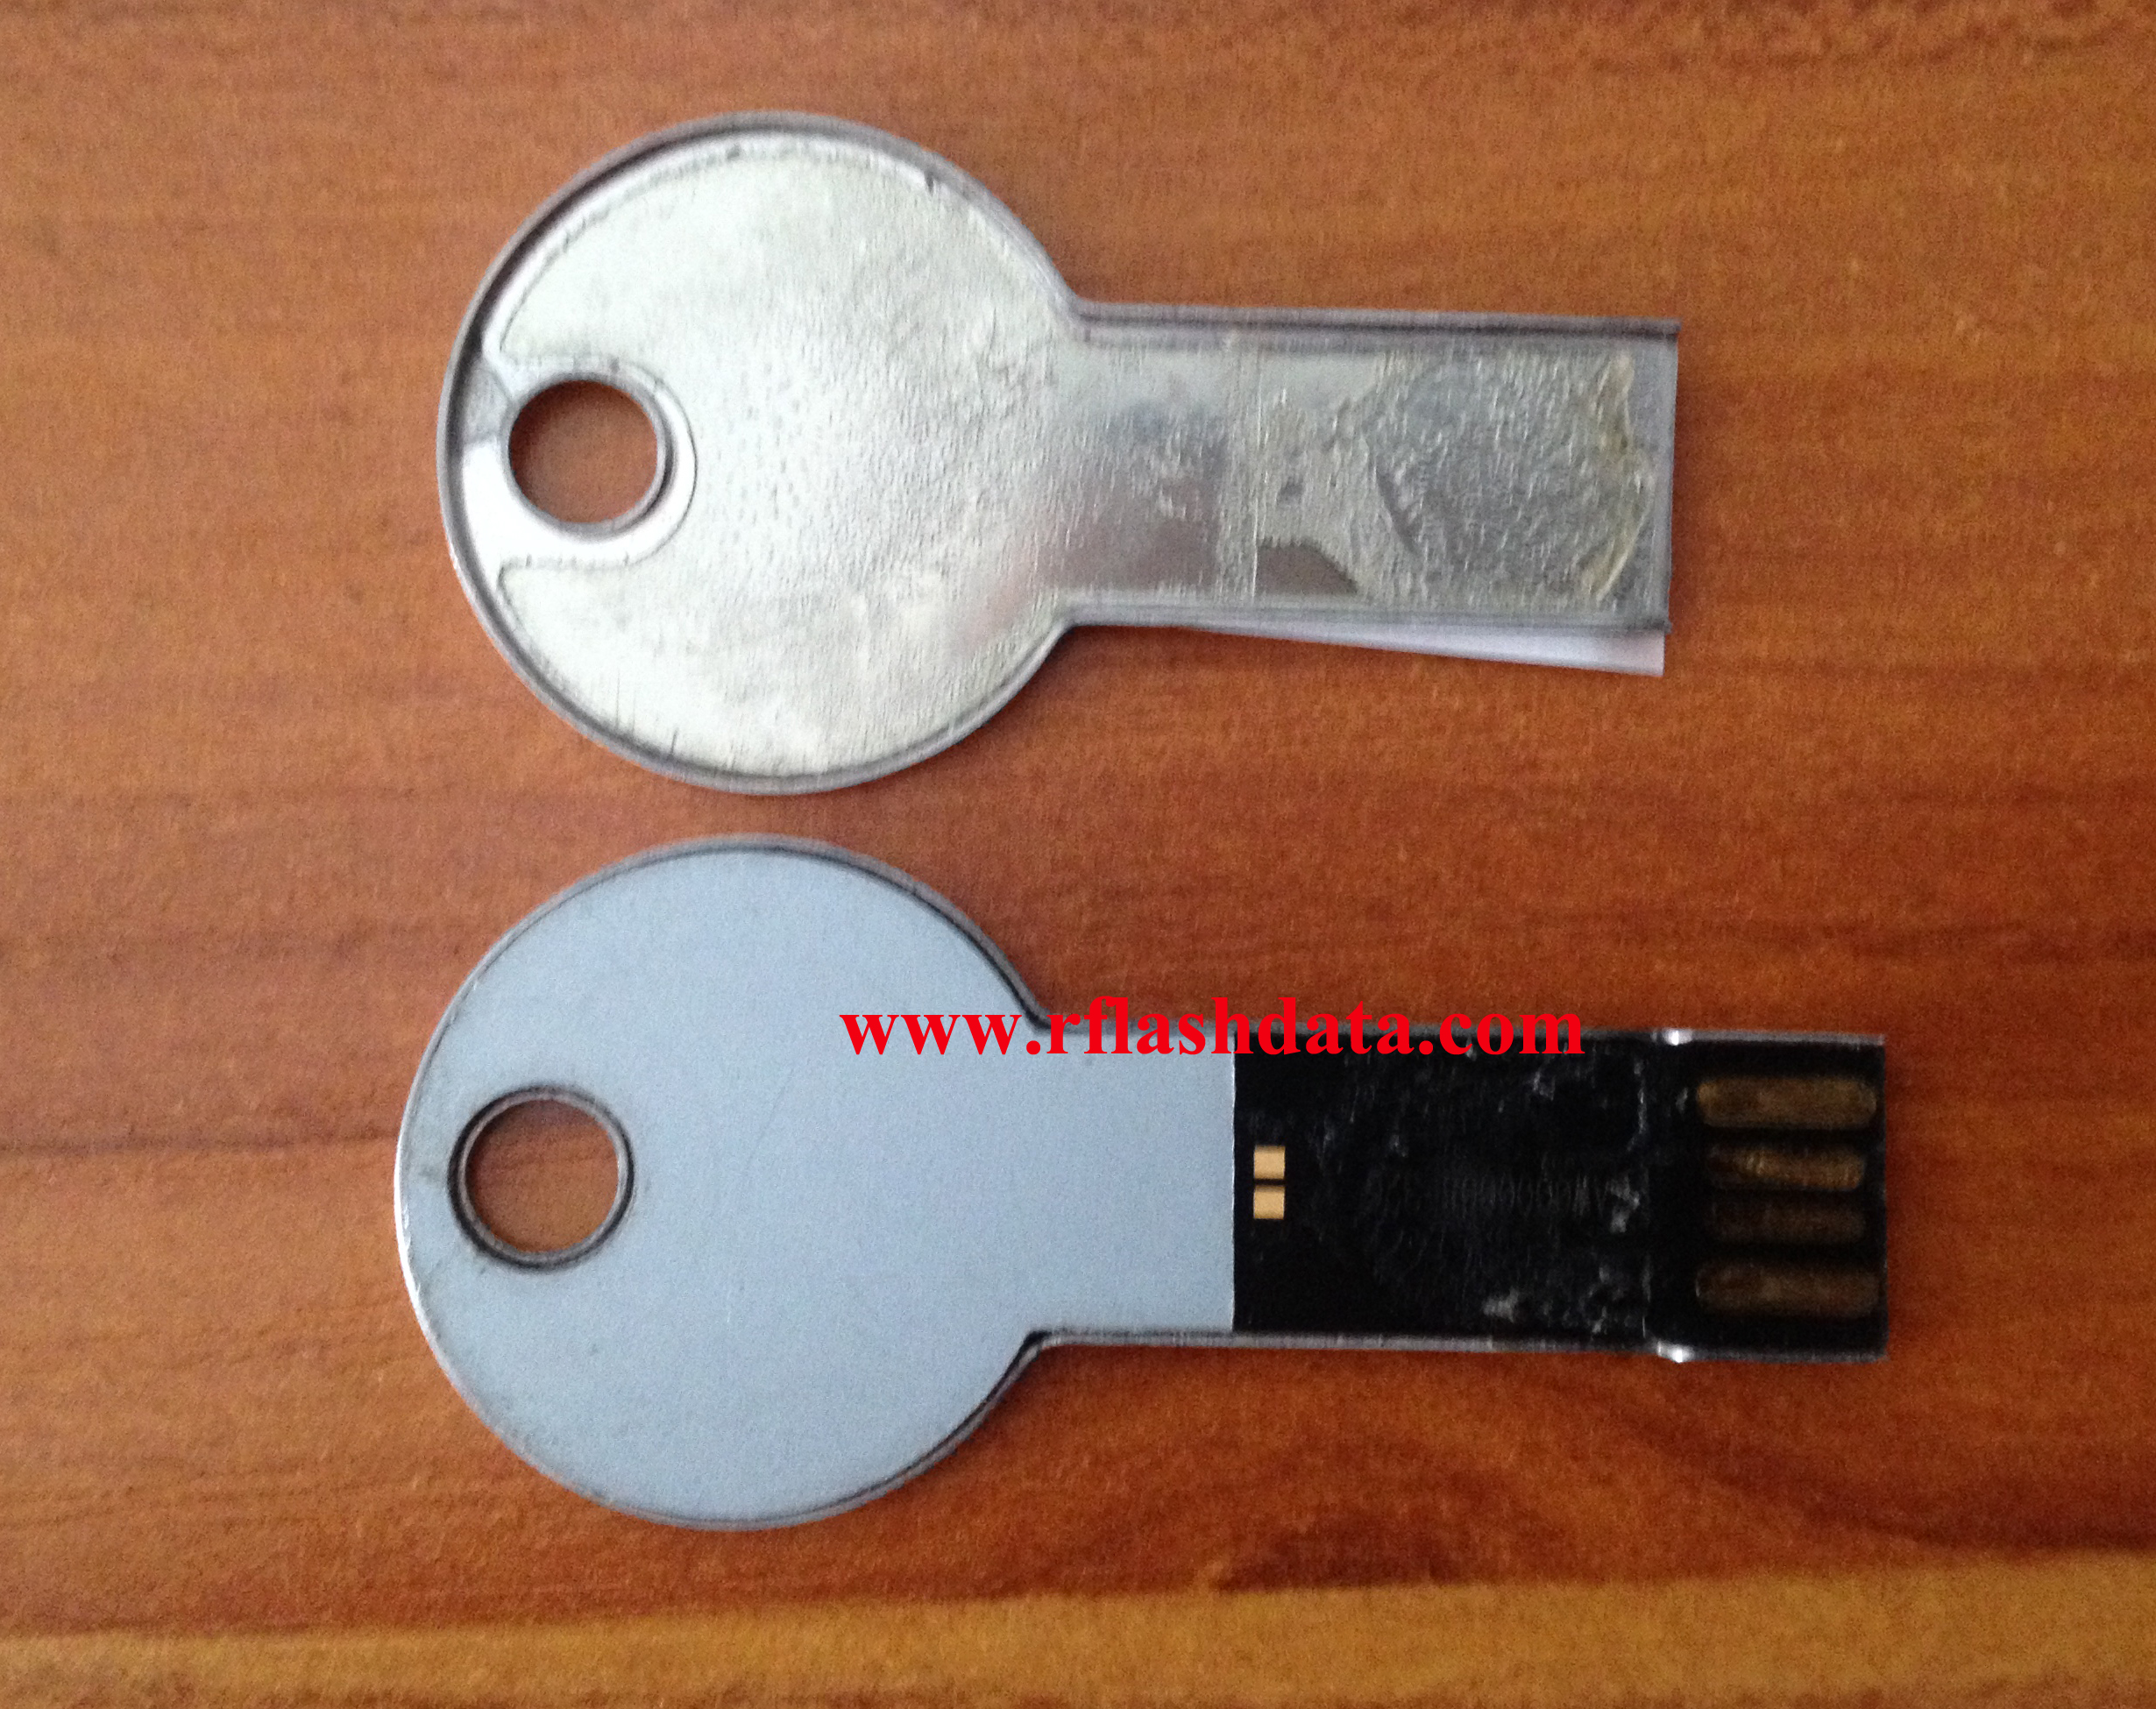 Lecia USB Flash drive data recovery